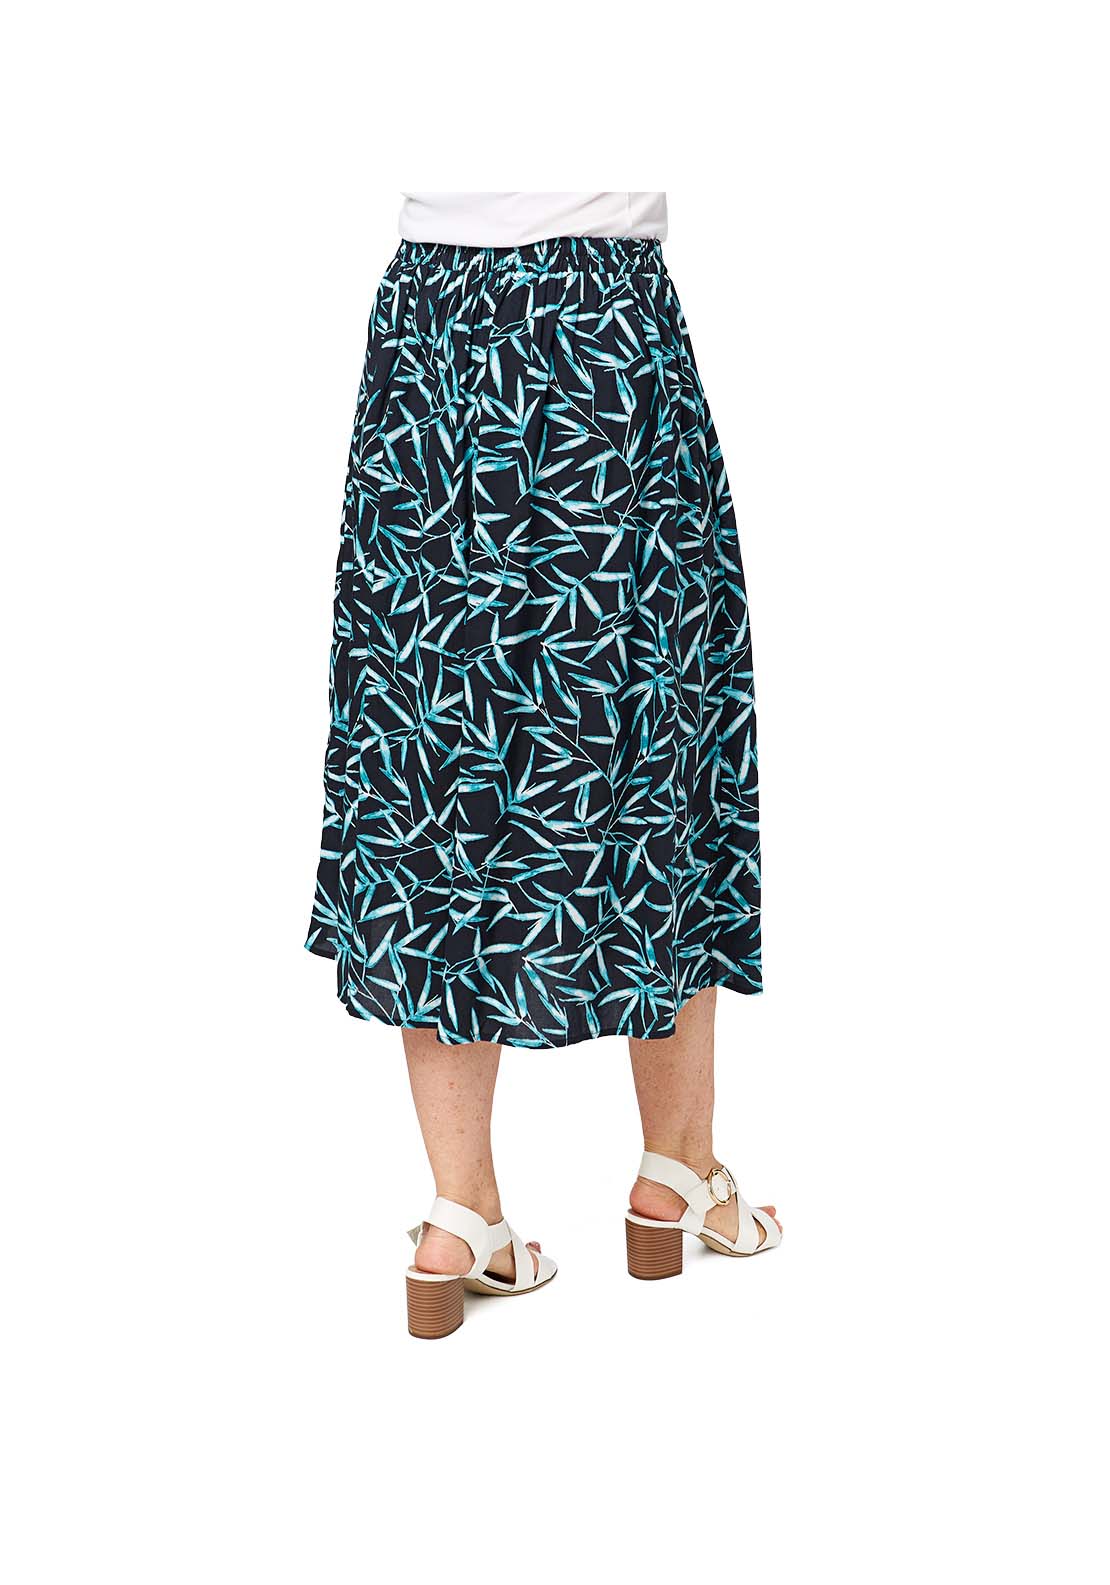 Tigiwear Turquoise Bamboo Leaf Print Skirt 4 Shaws Department Stores